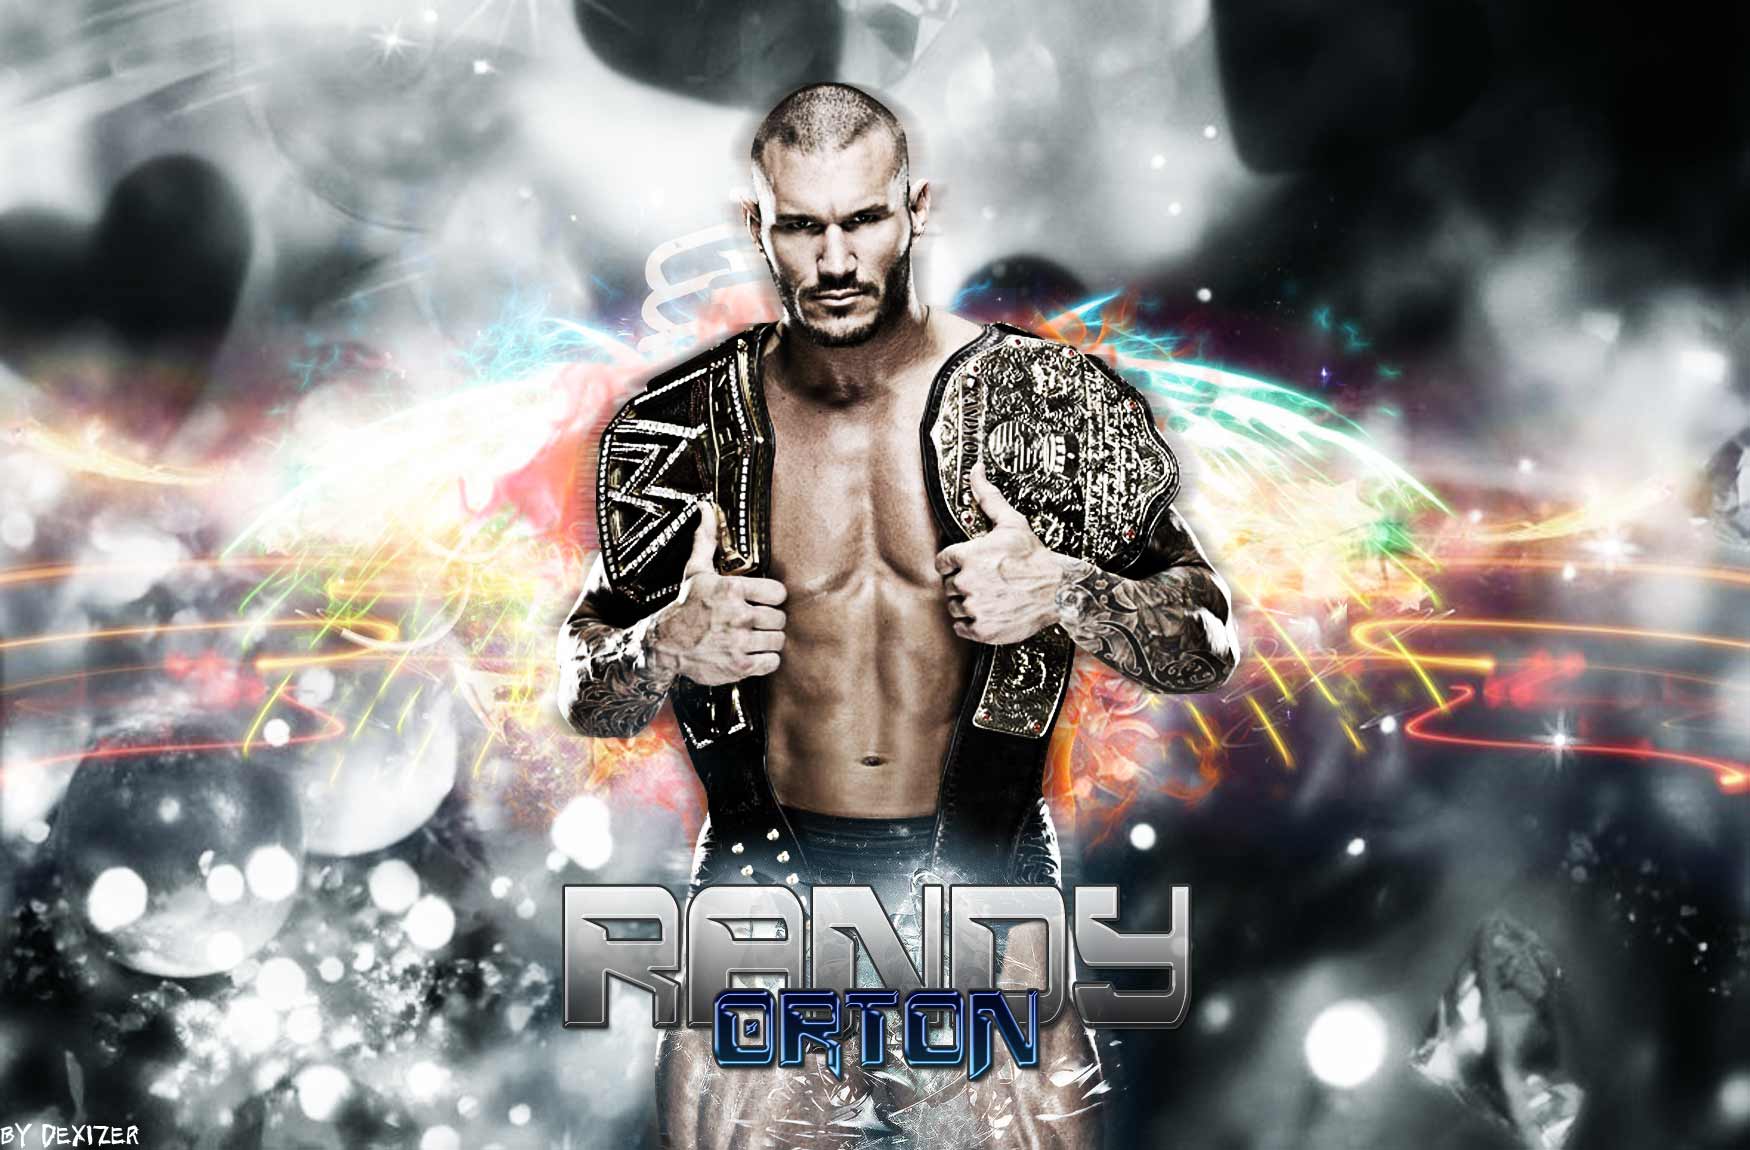 image For > Wwe Evolution 2014 Randy Orton